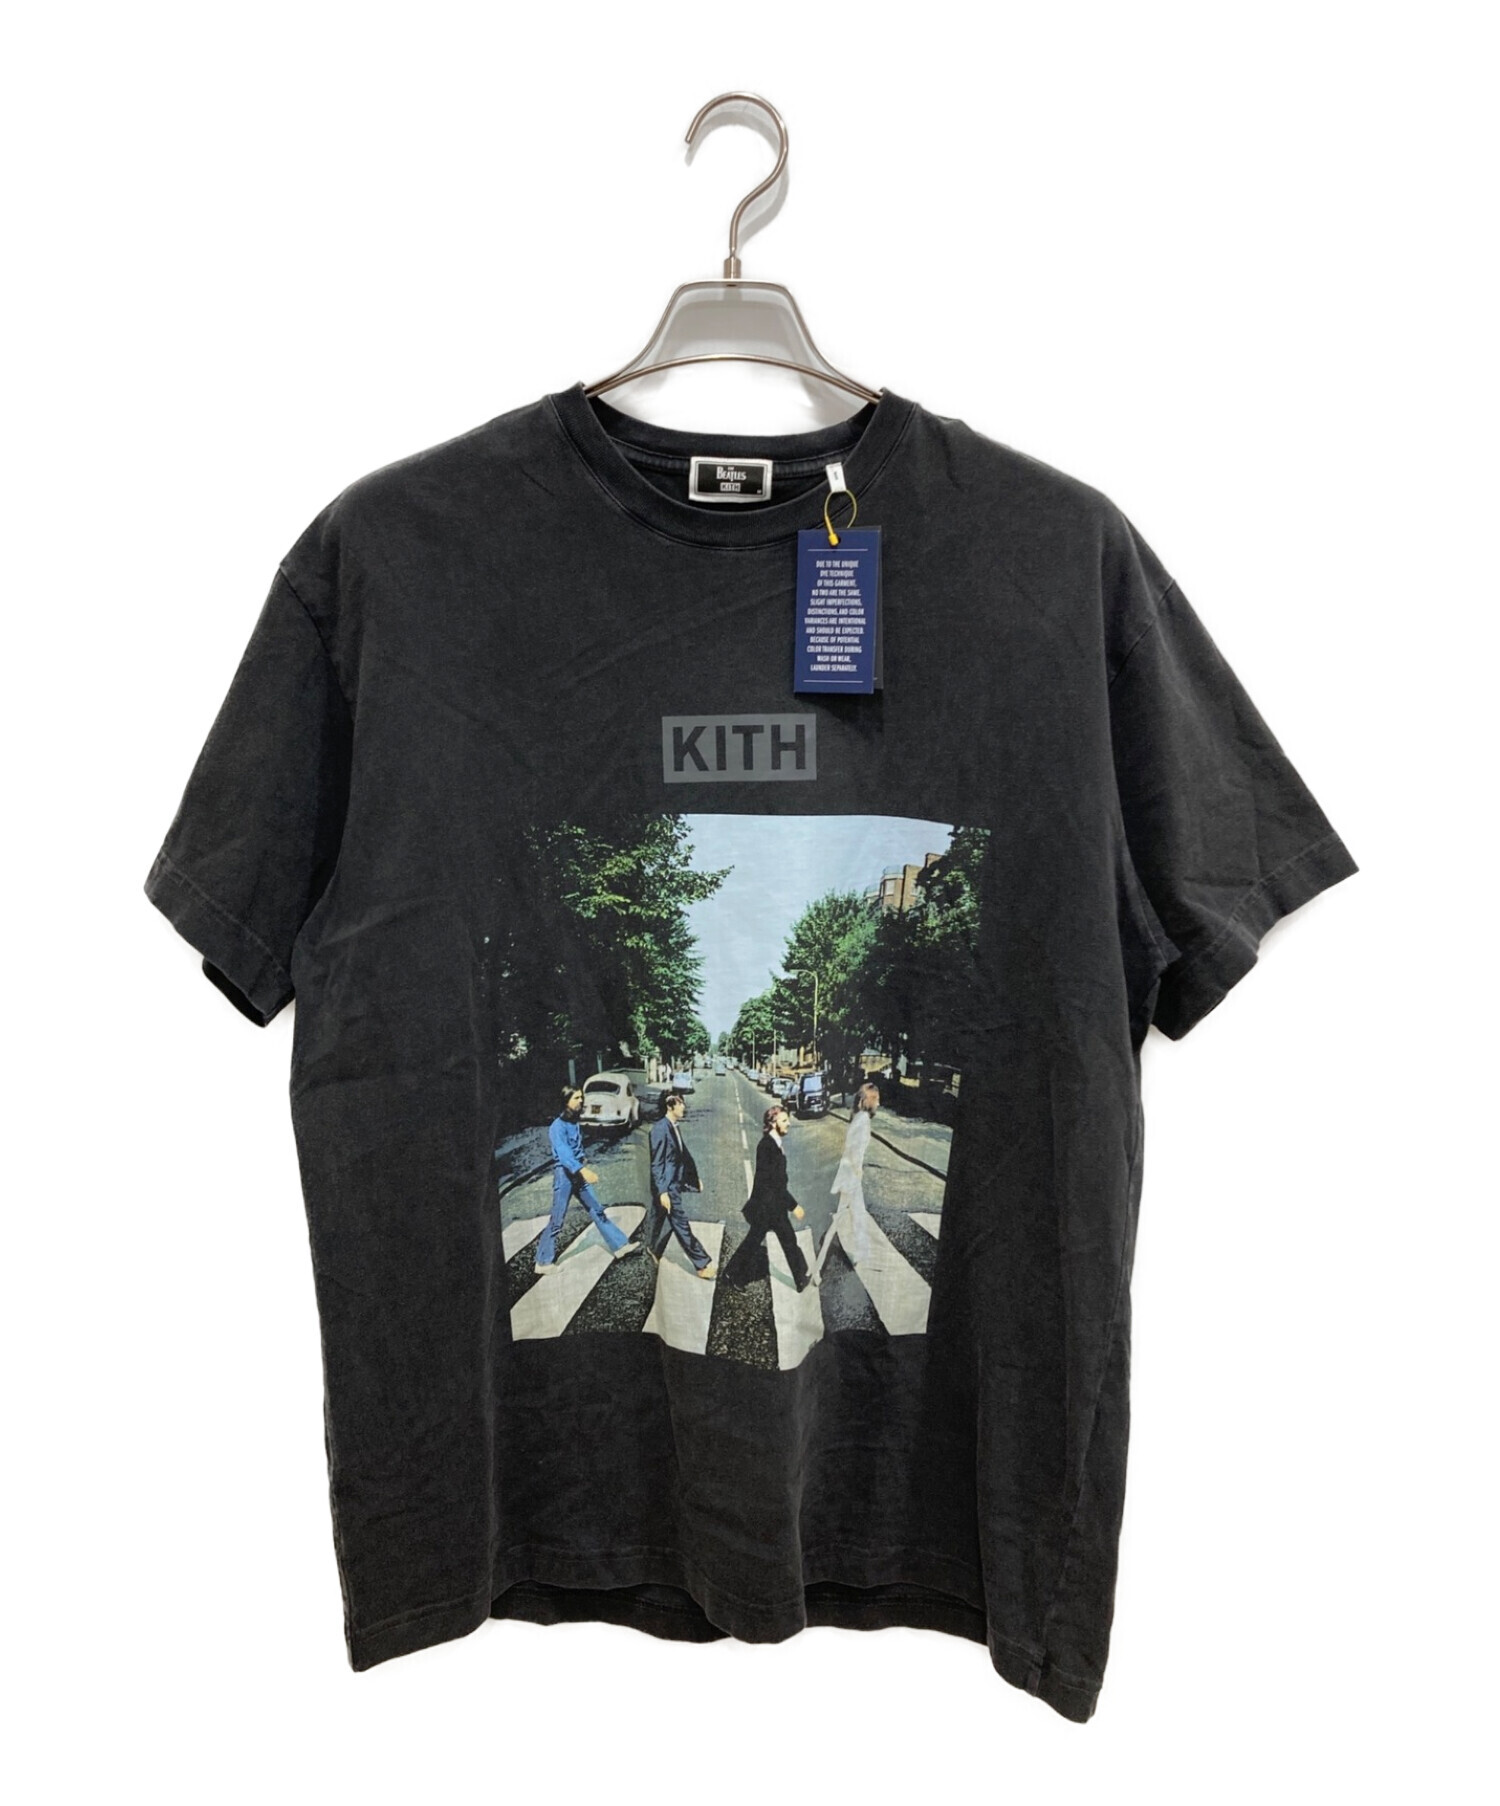 KITH (キス) Beatles Abbey Road Tee ブラック サイズ:M